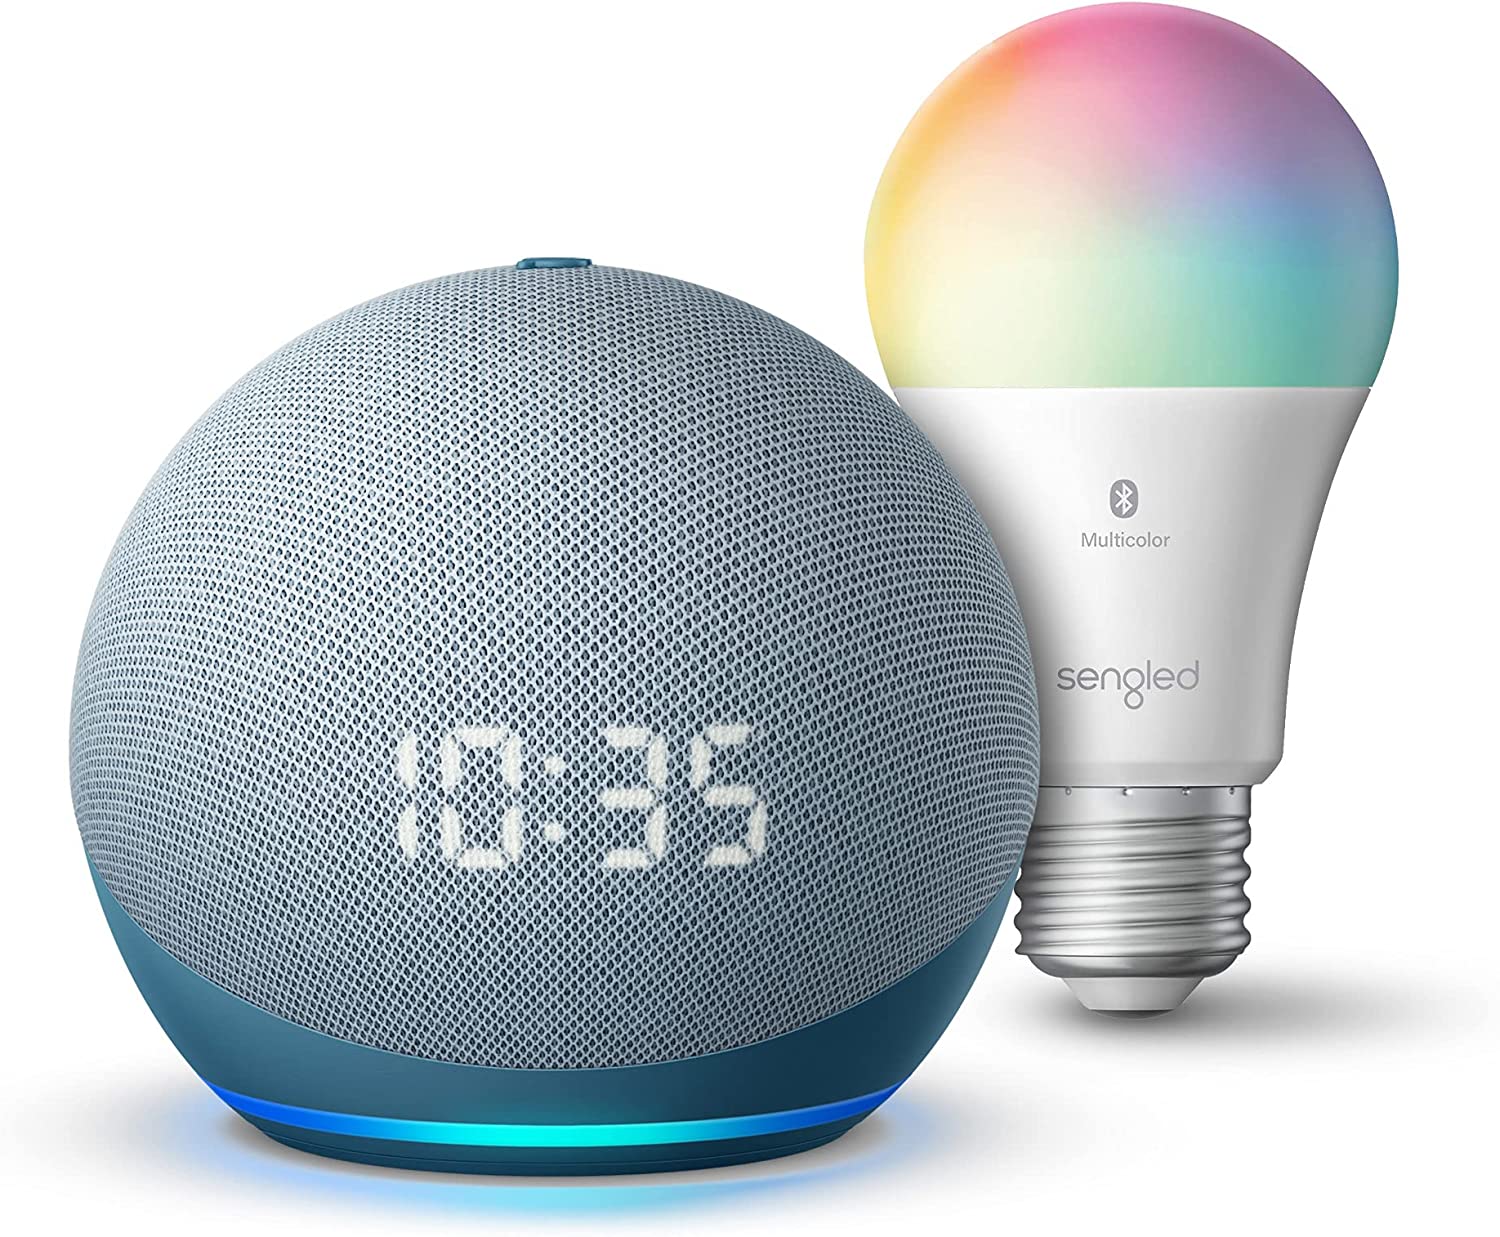 Prime Day Amazon Echo Bundle Deals - Echo Dot + Sengled Colored Bulb